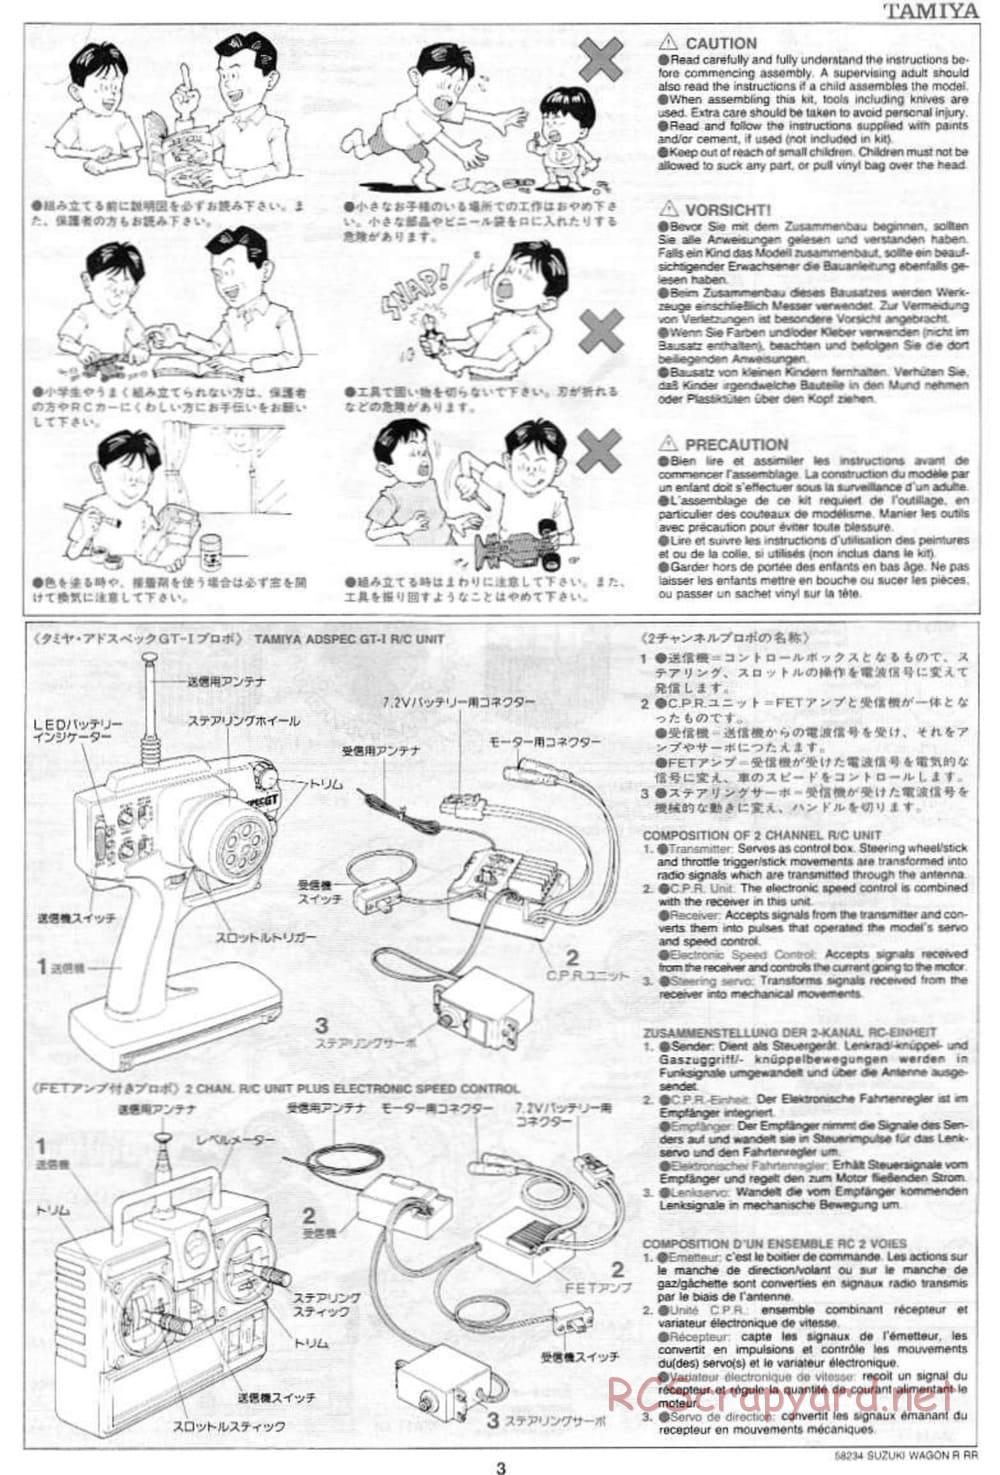 Tamiya - Suzuki WagonR-RR - M03 Chassis - Manual - Page 3